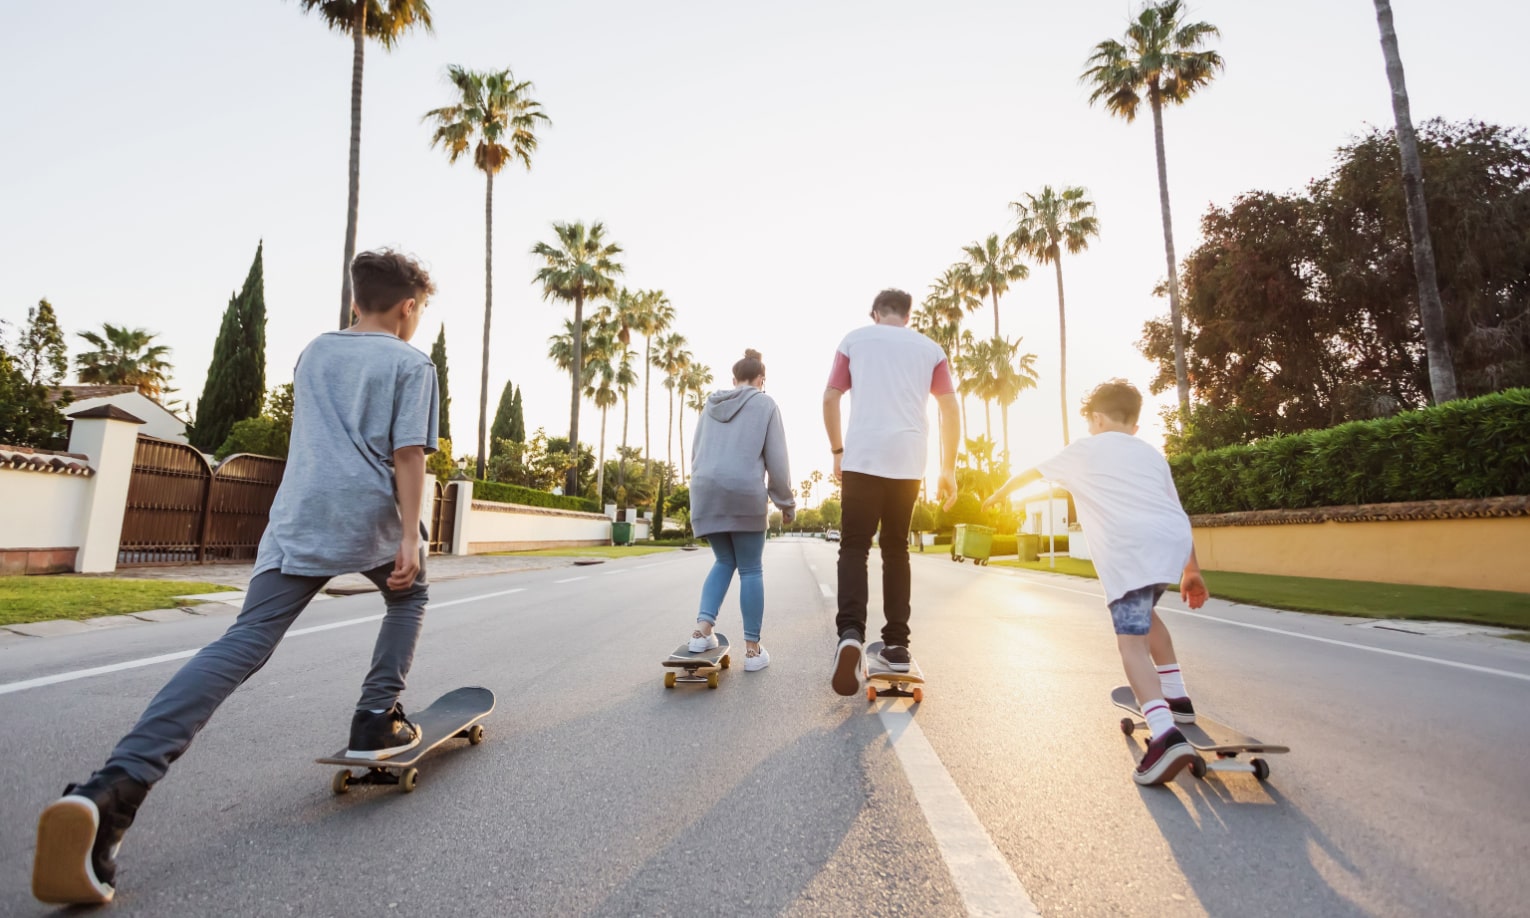 родители и дети на скейтбордах на улице